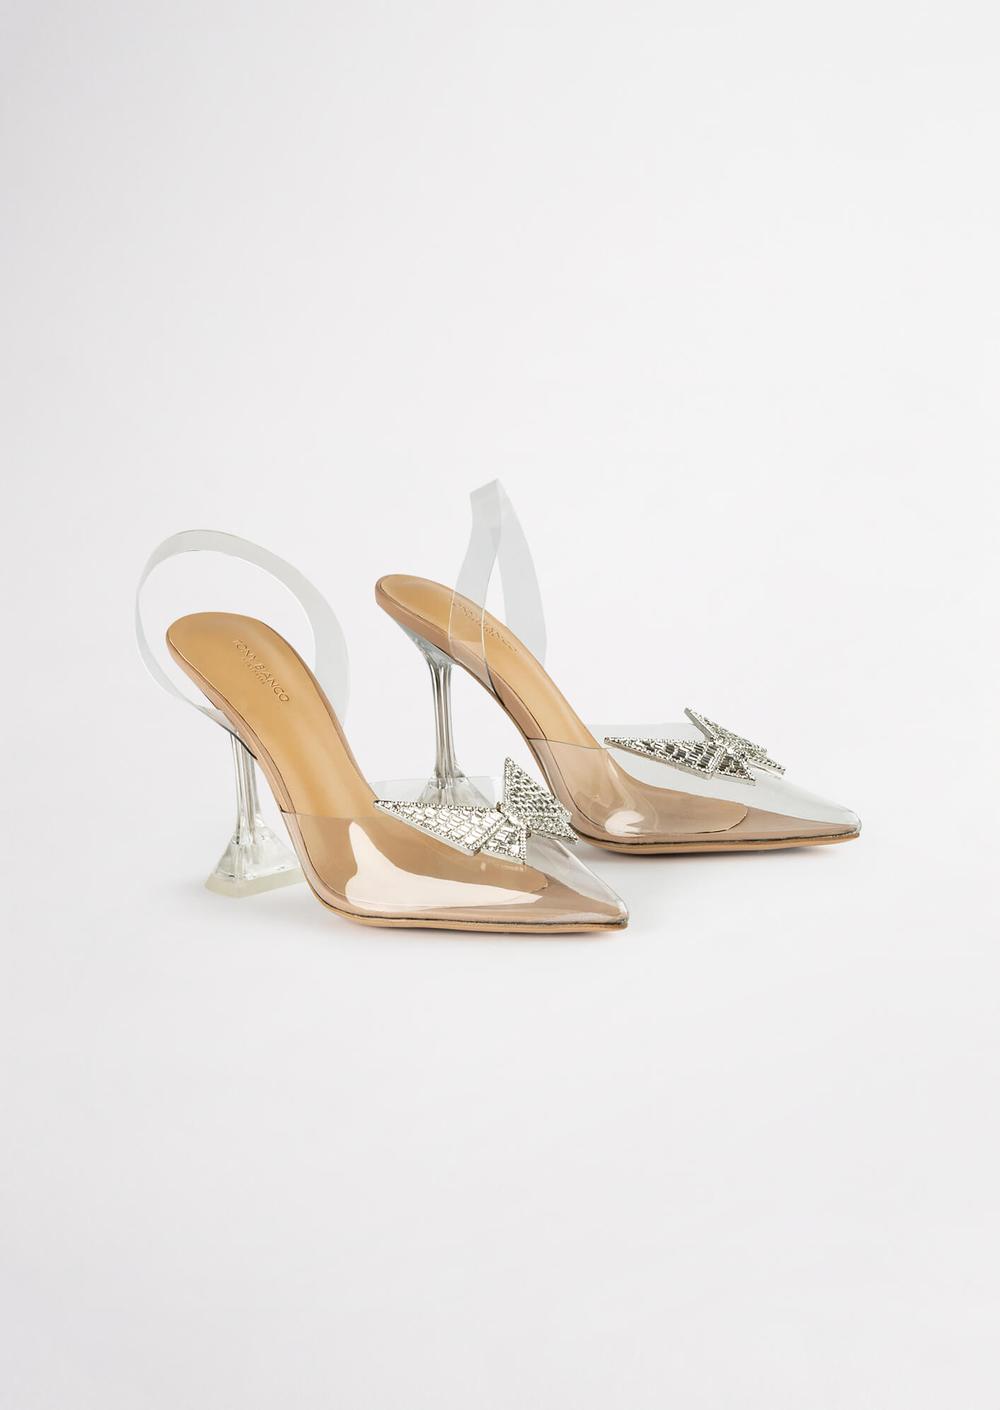 LEXUS CLEAR VINYLITE - TONY BIANCO - on sale, womens footwear - Stomp Shoes Darwin